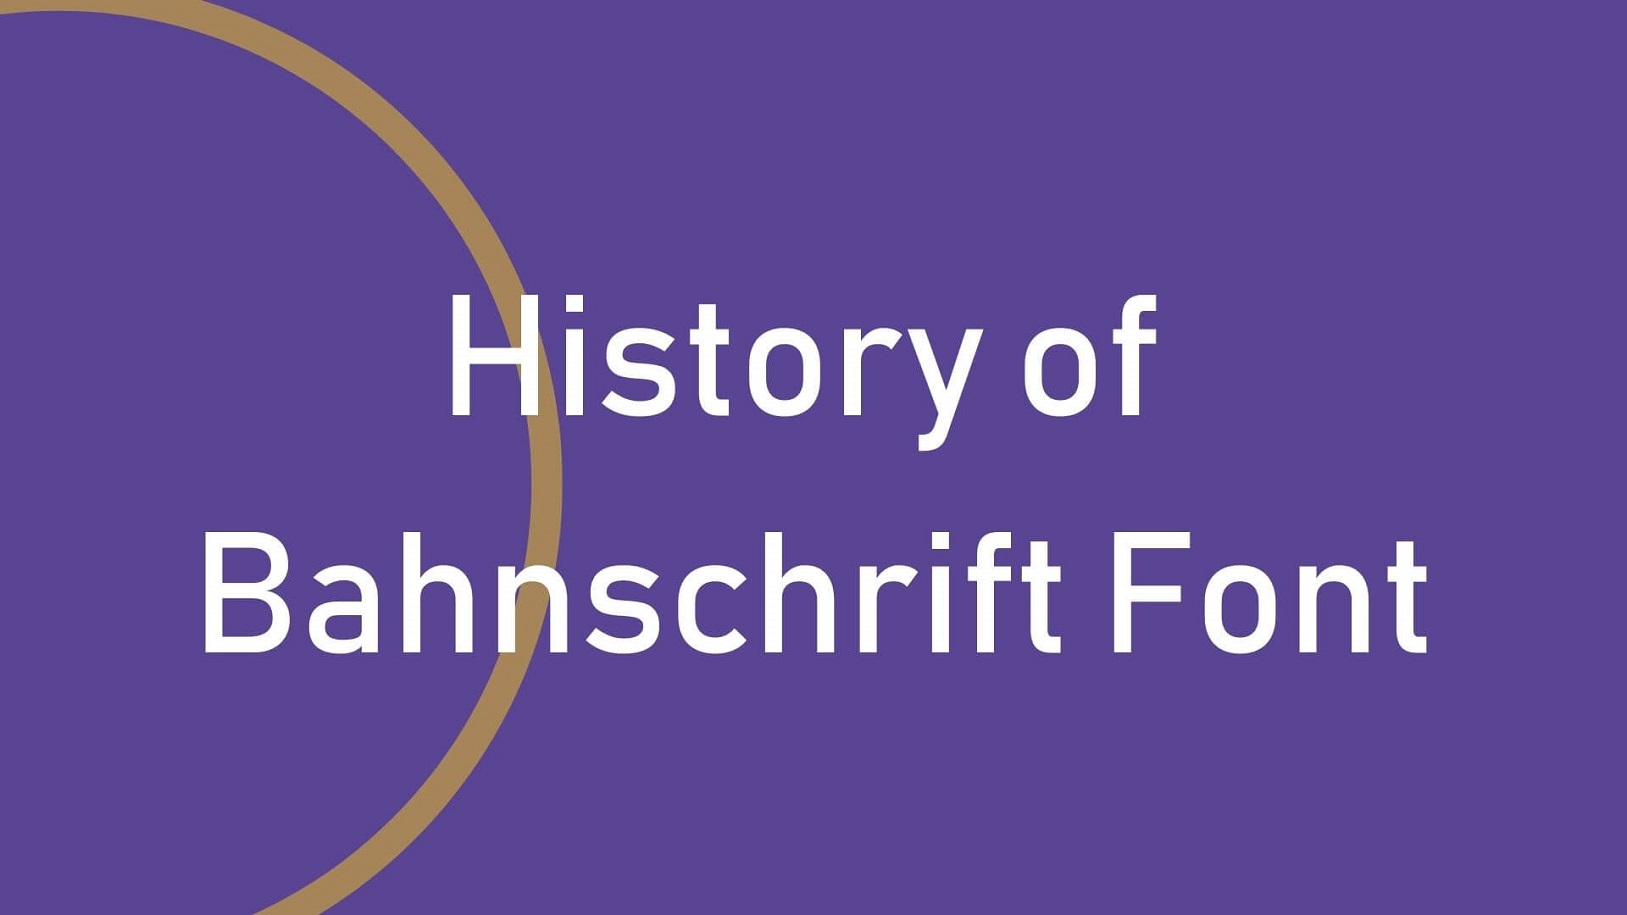 History of Bahnschrift Font